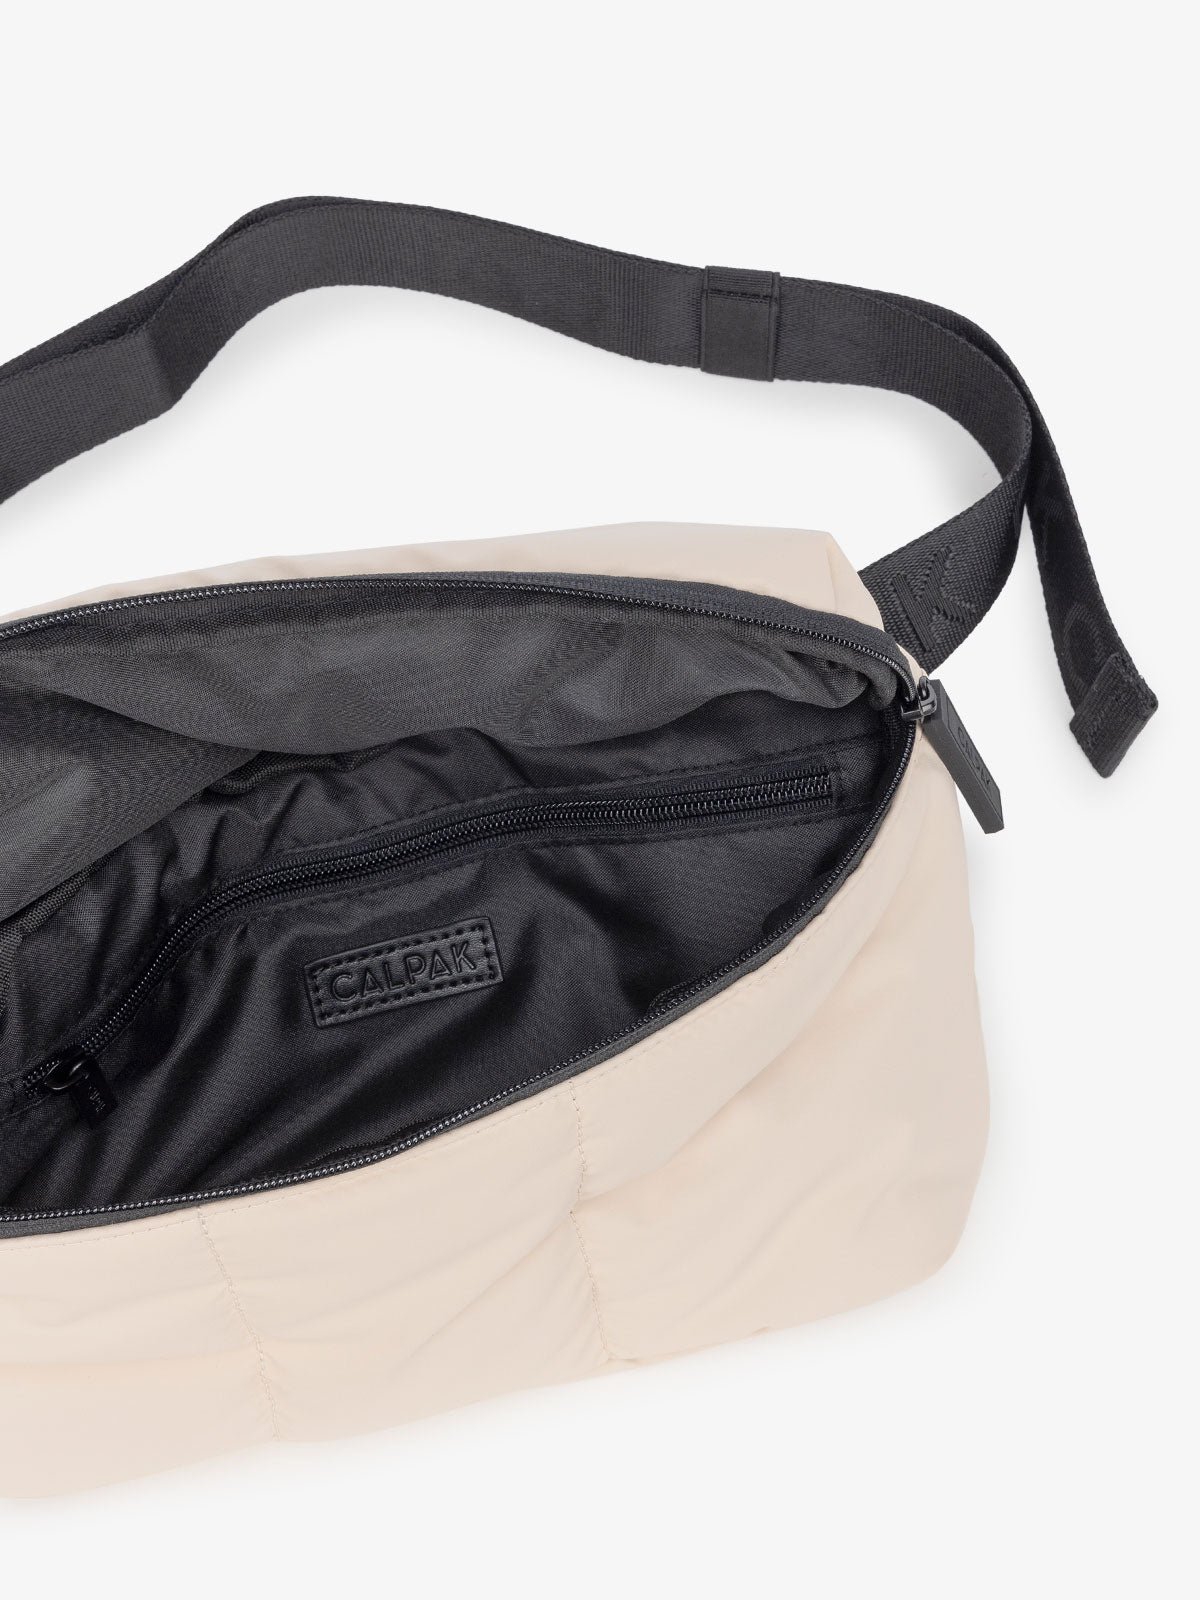 Luka belt bag with adjustable crossbody strap and interior pocket in ivory